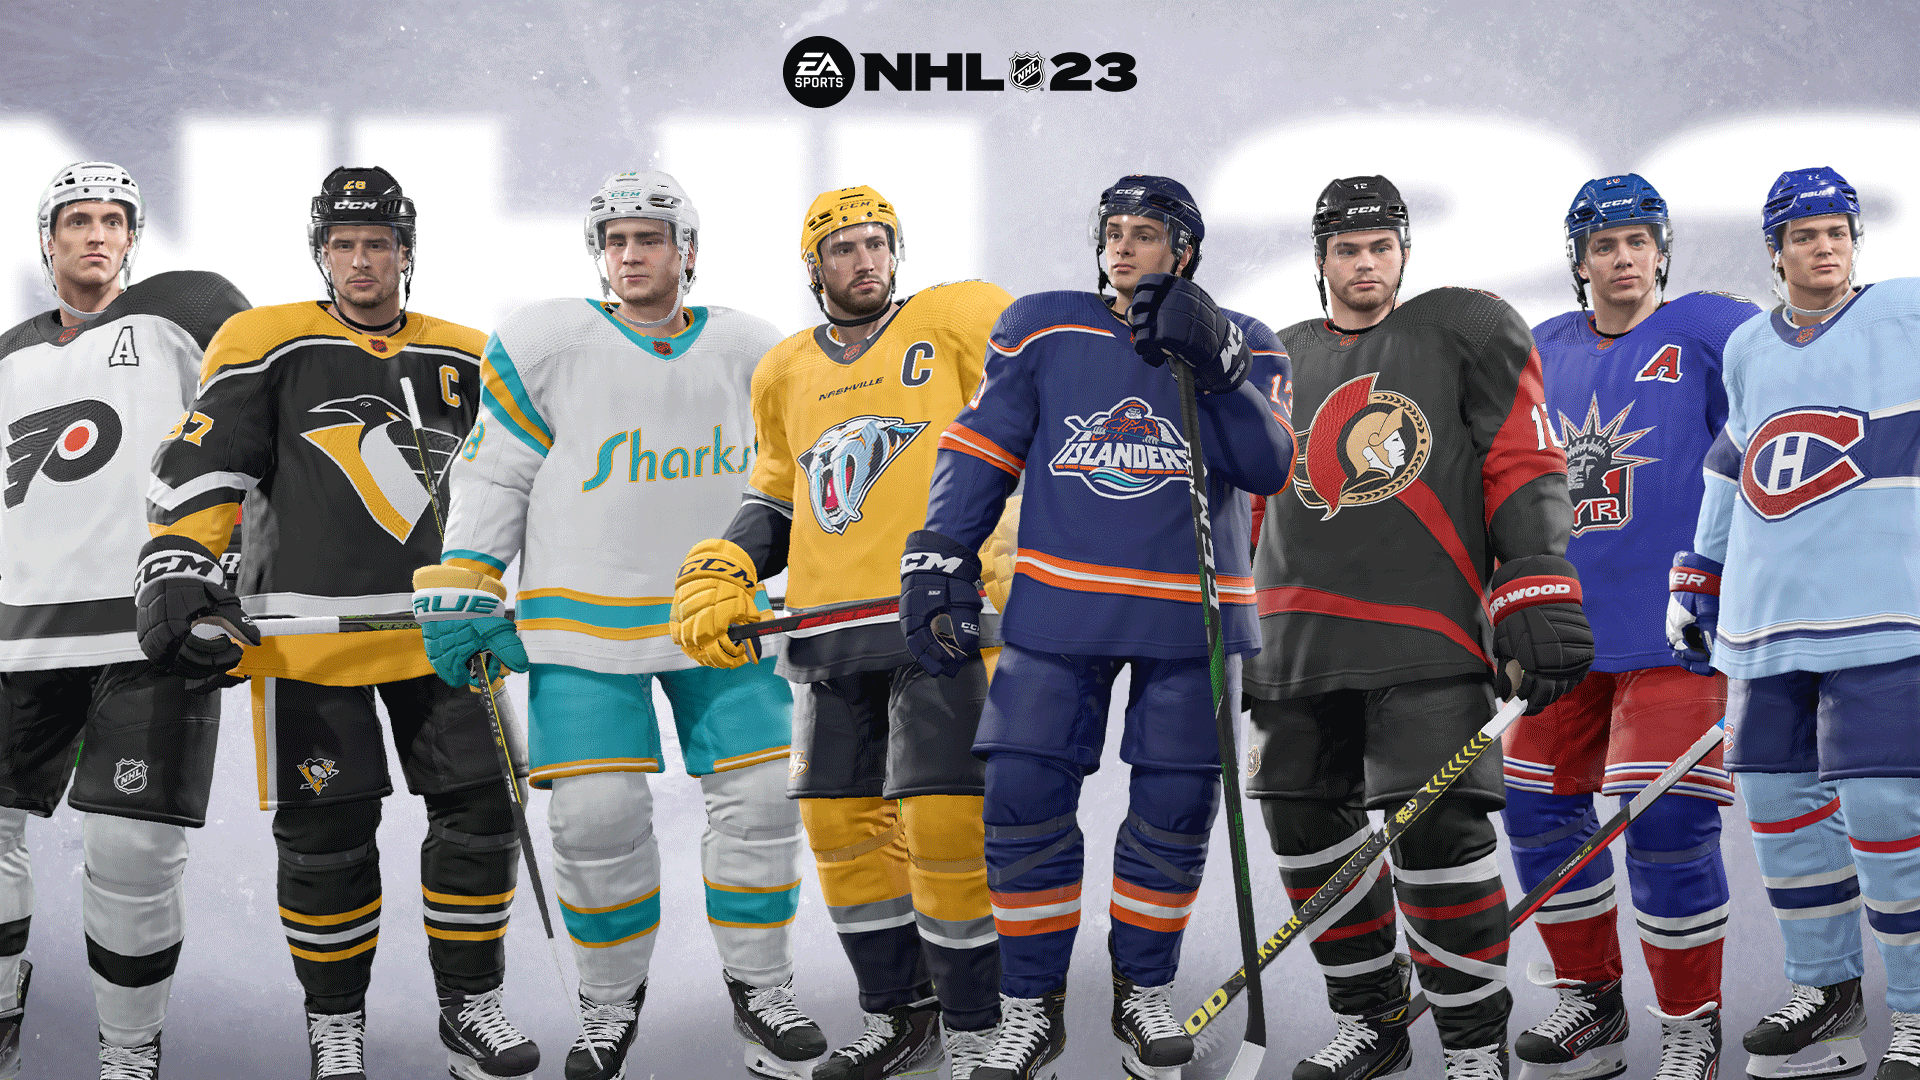 NHL on X: The #ReverseRetro jerseys, but make it @EASPORTSNHL